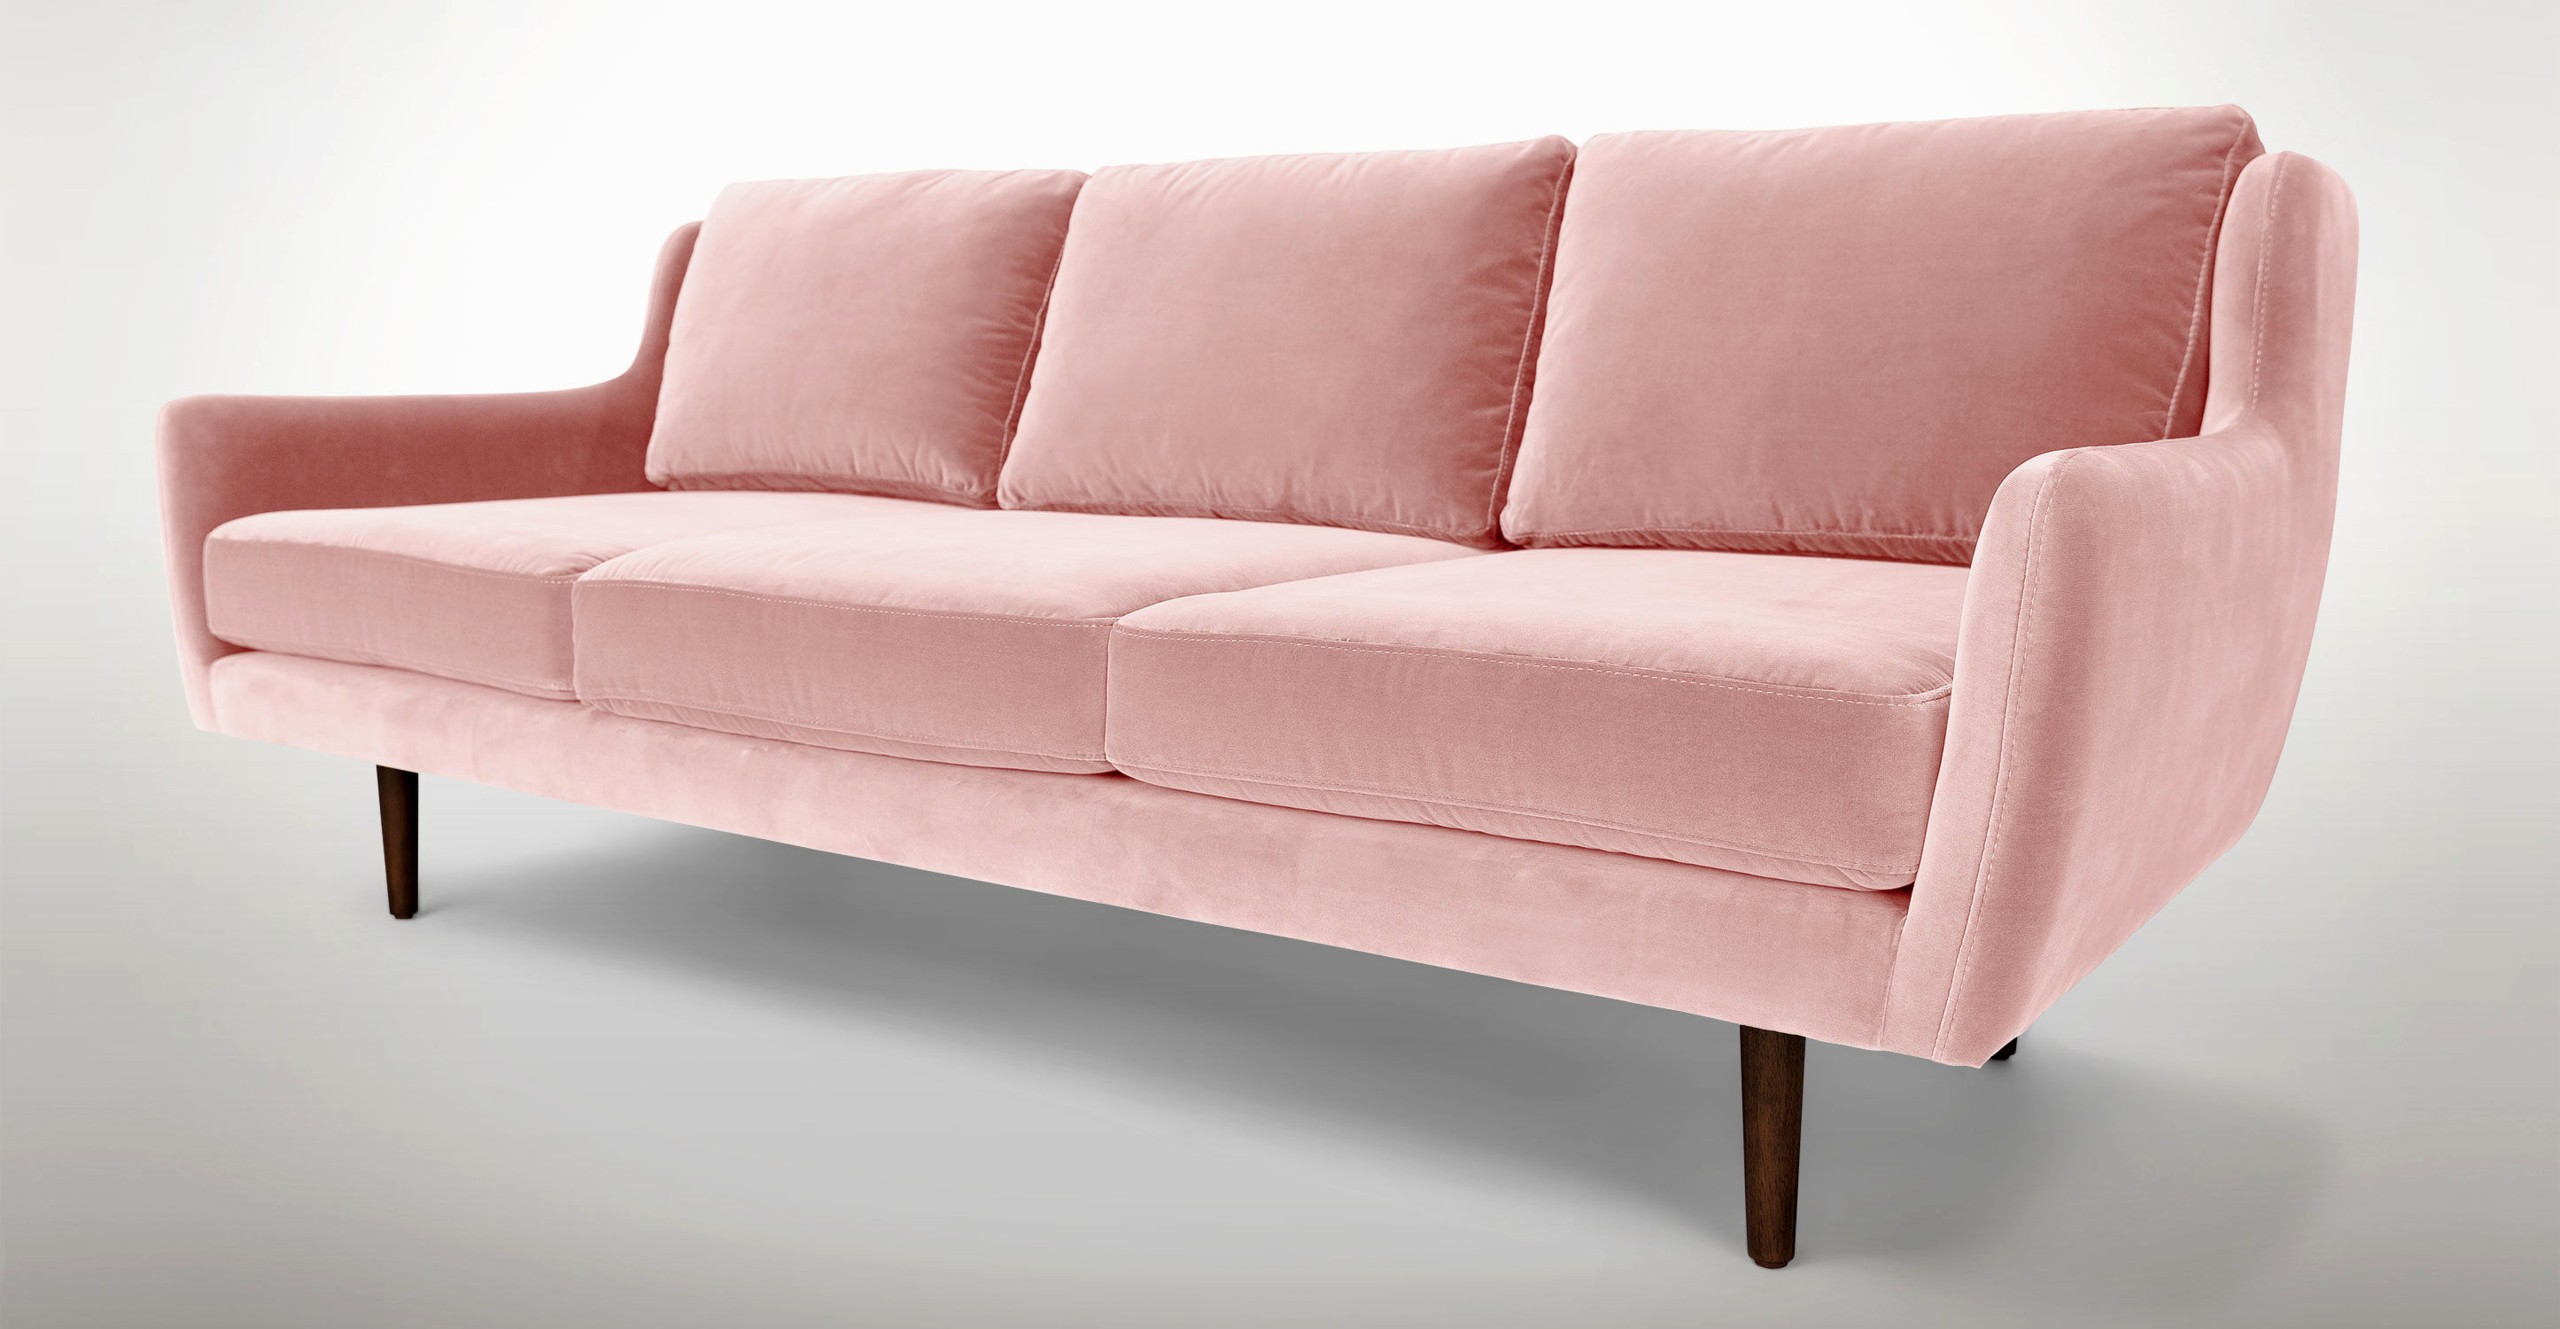 Top pink tufted sofa photograph modern sofa design ideas